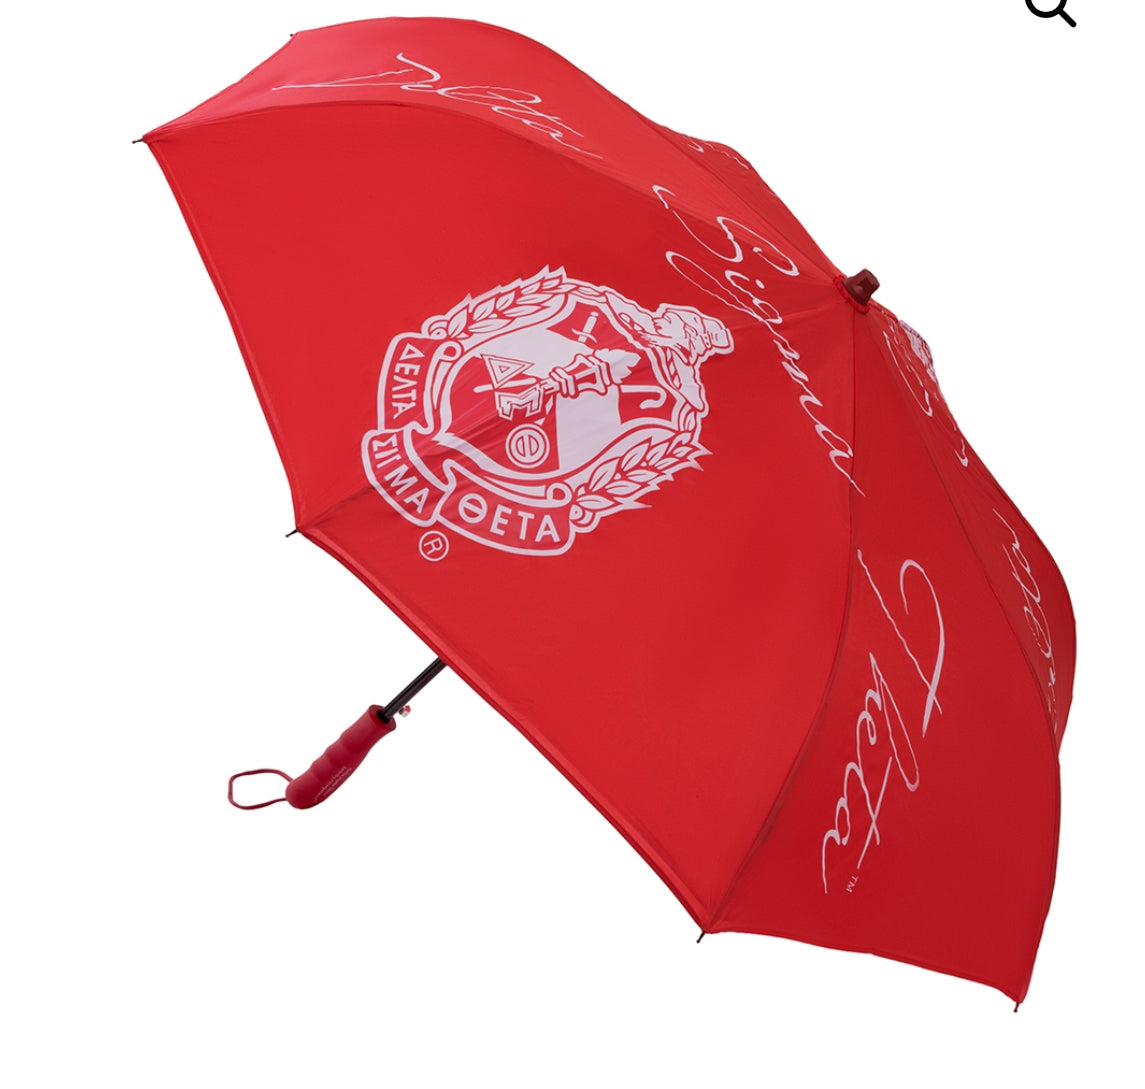 DST - Red inverted umbrella